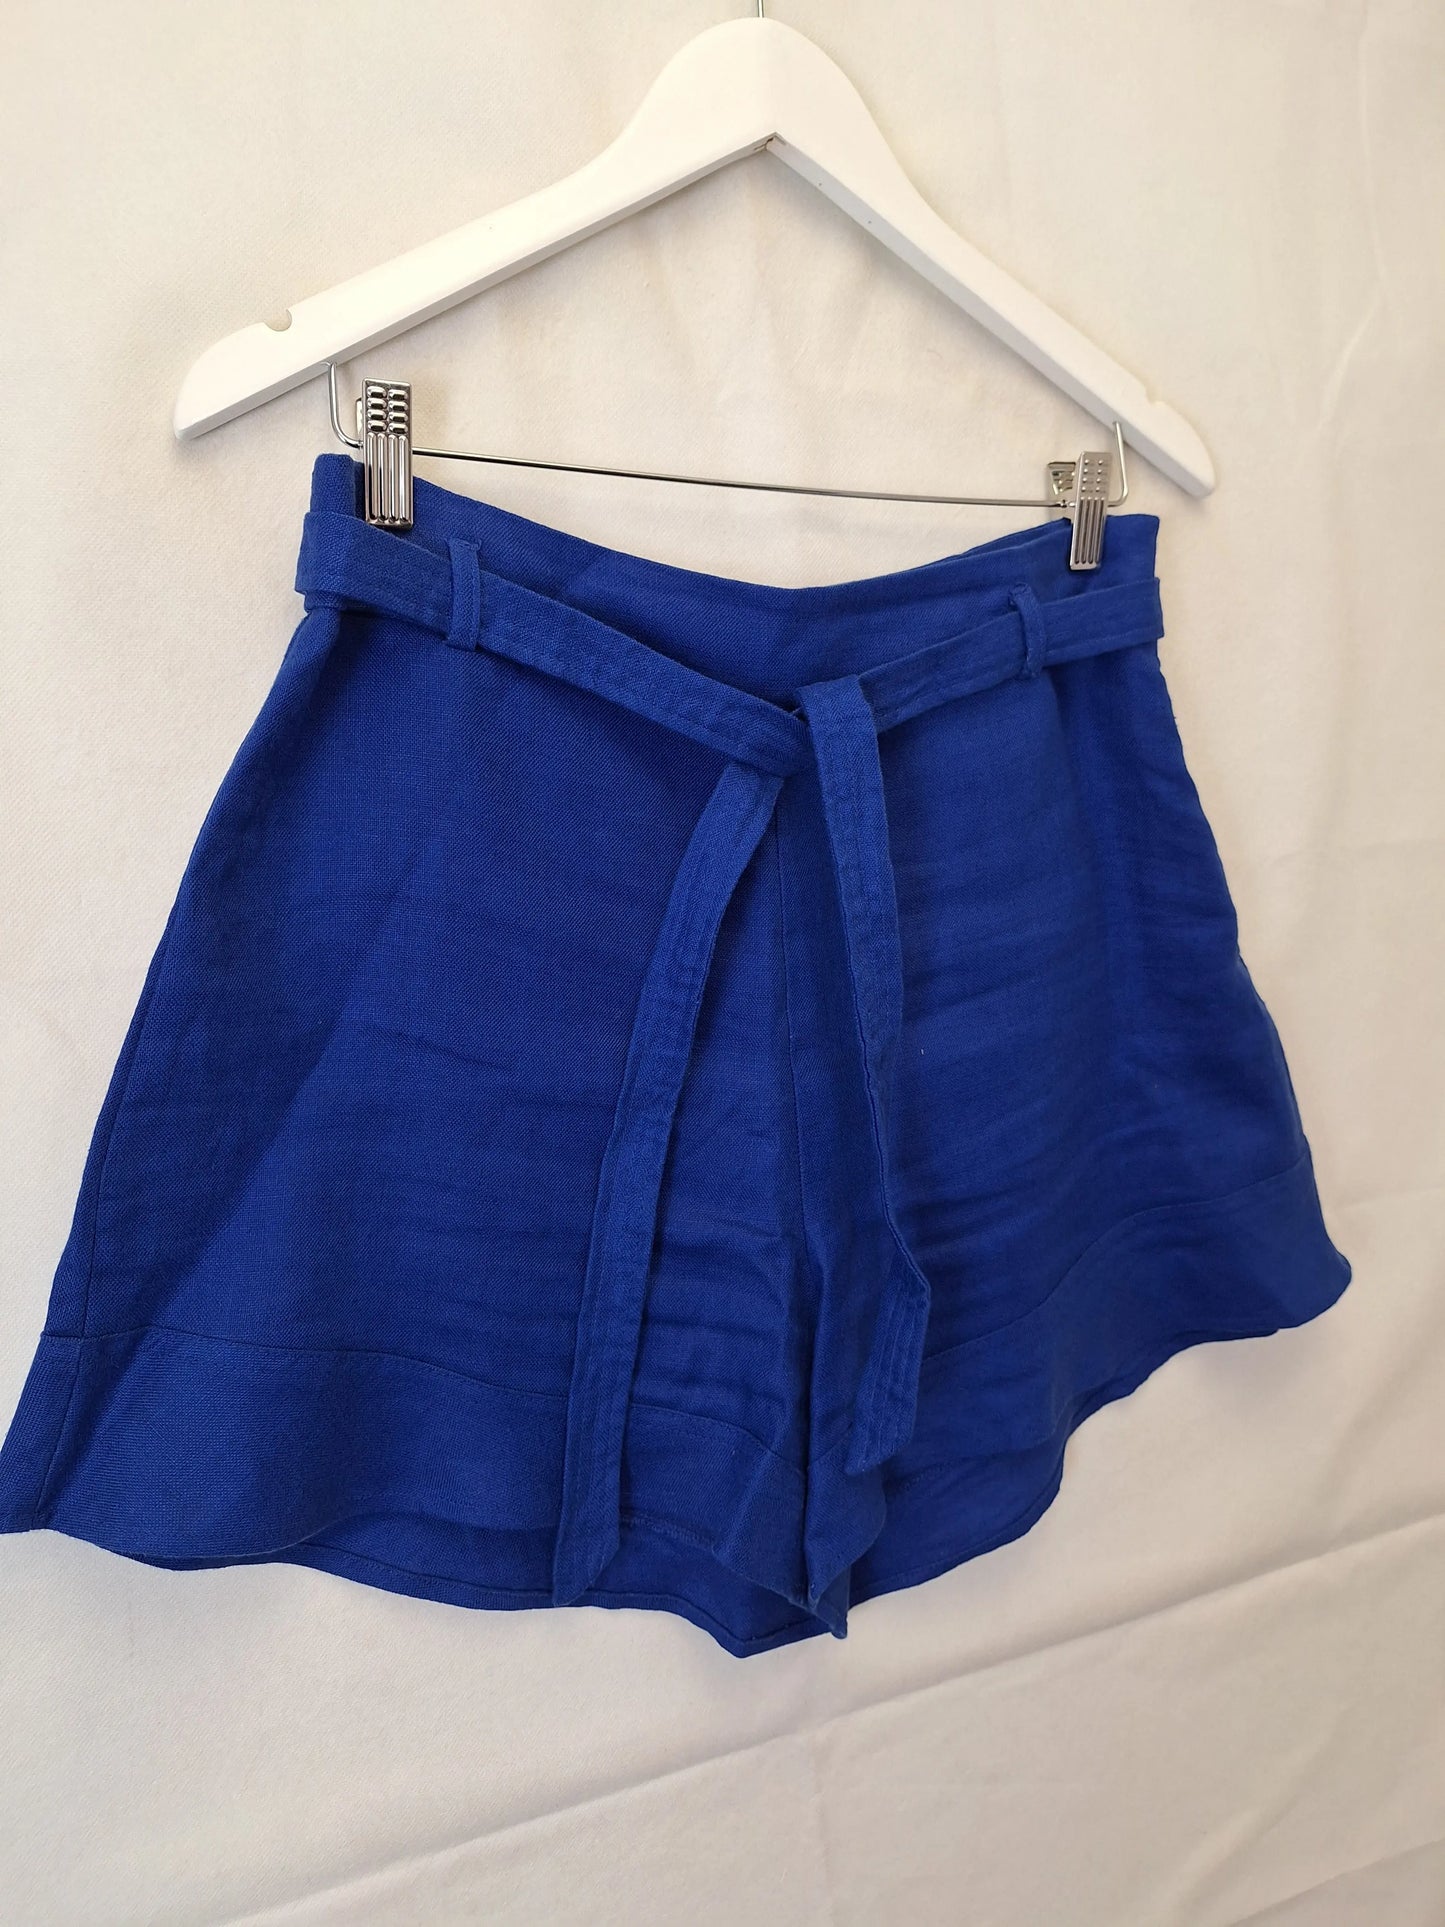 Witchery Summer Linen Tie Waist Shorts Size 10 by SwapUp-Online Second Hand Store-Online Thrift Store